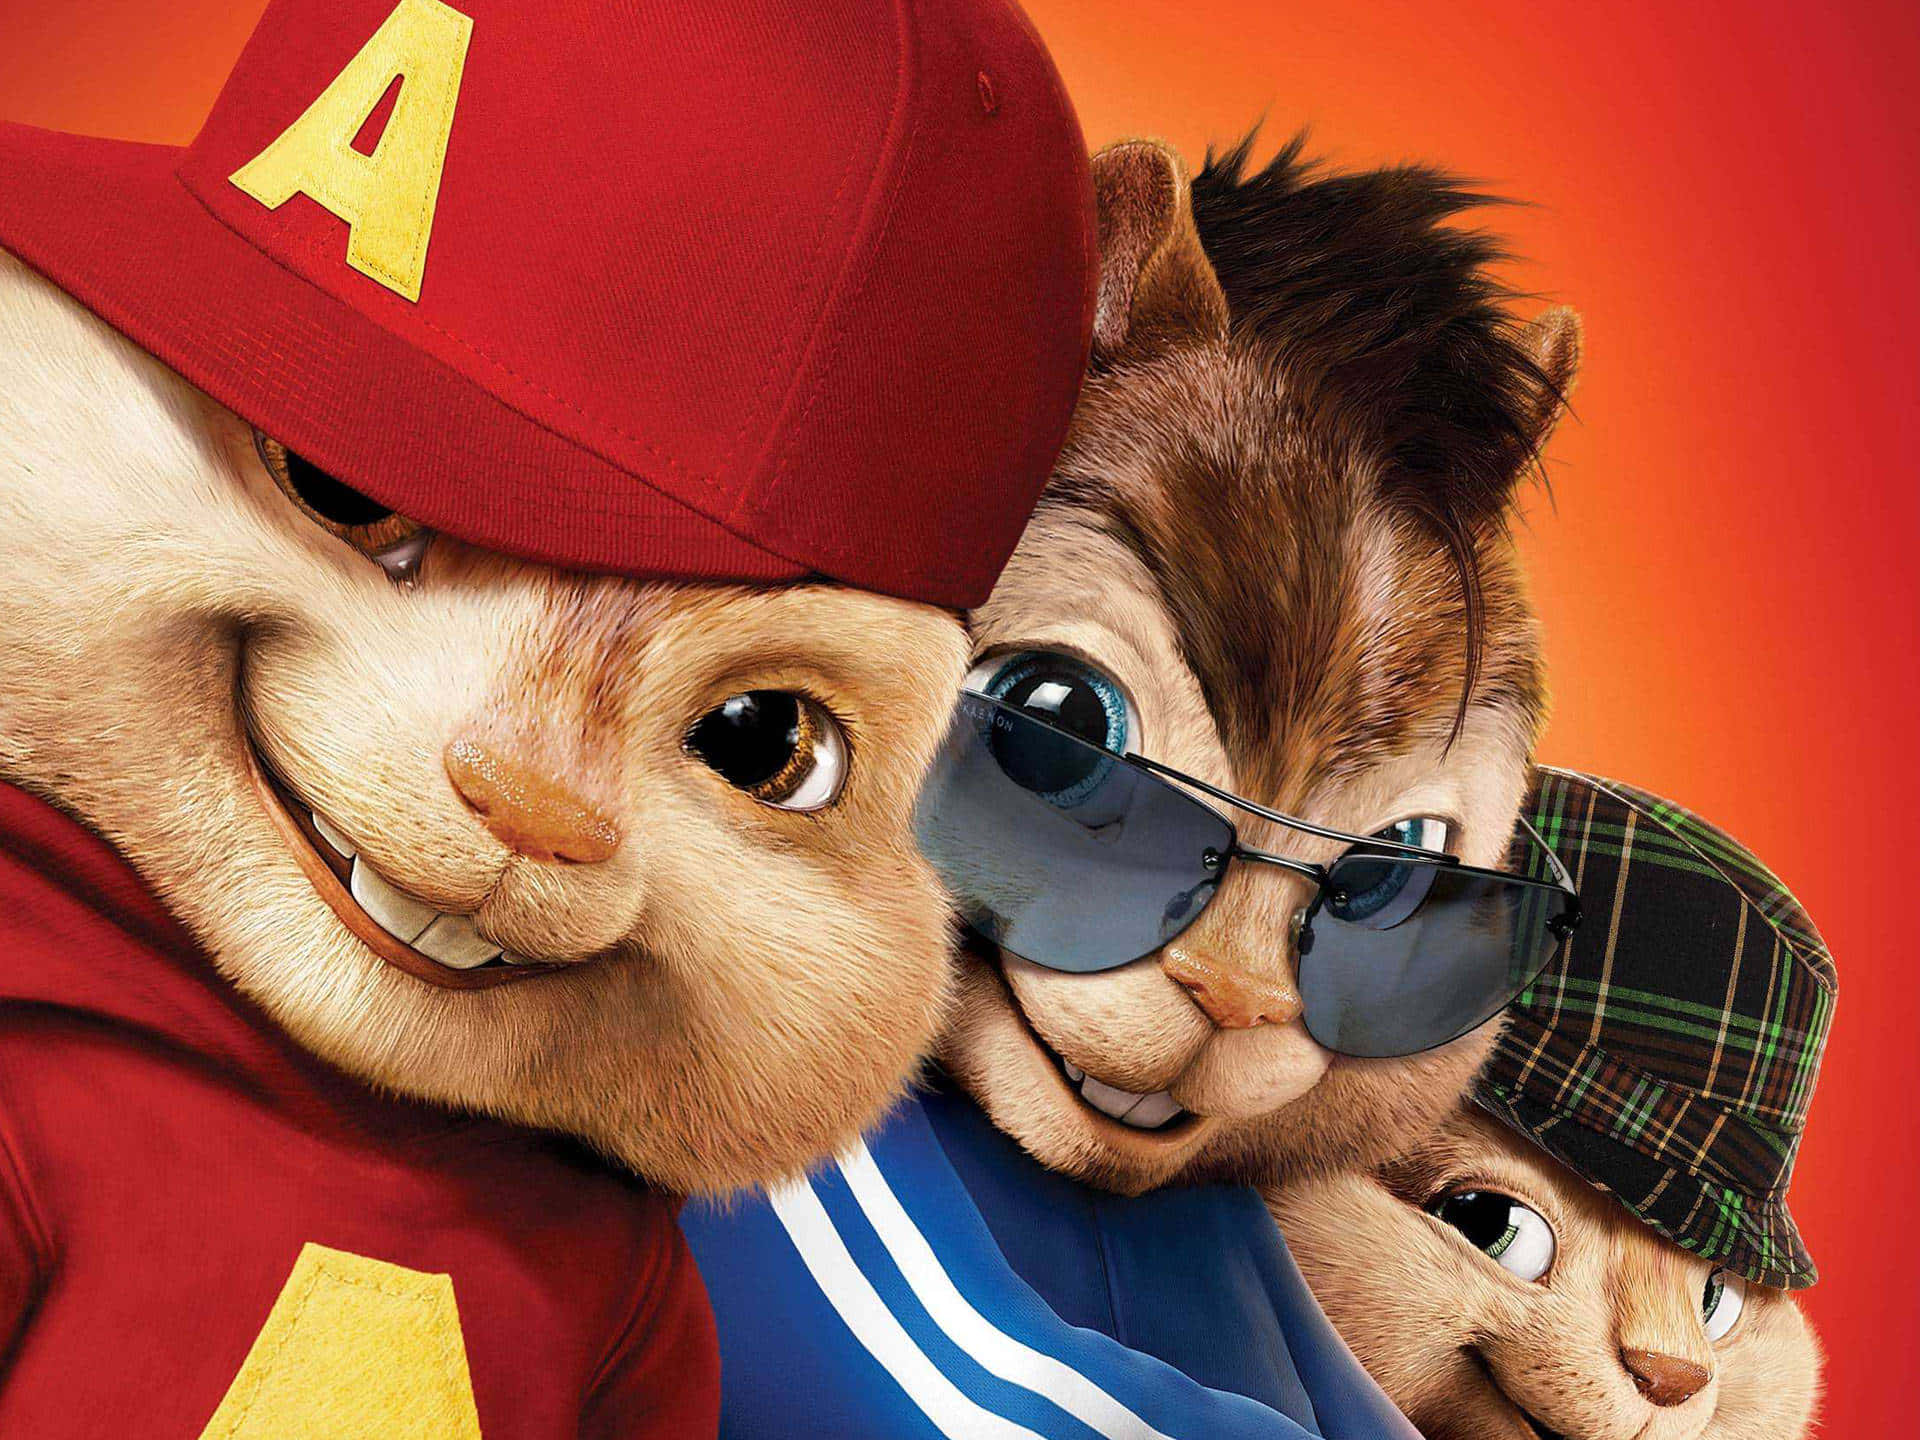 Three musically talented Chipmunks: Alvin, Simon, and Theodore